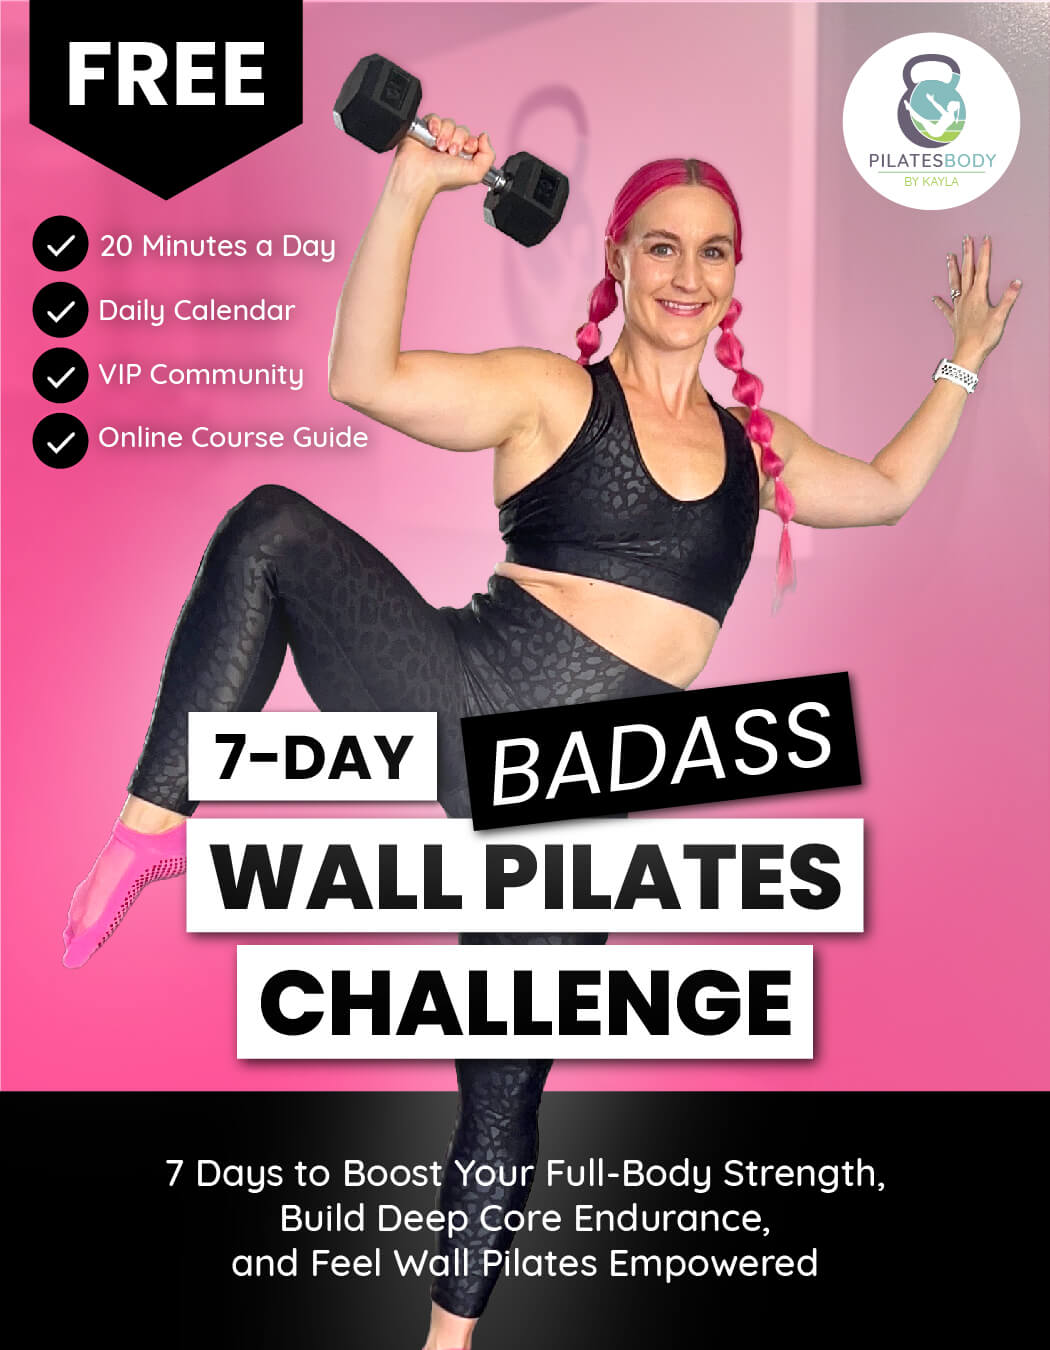 Badass Wall Pilates Challenge - PILATESBODY by Kayla